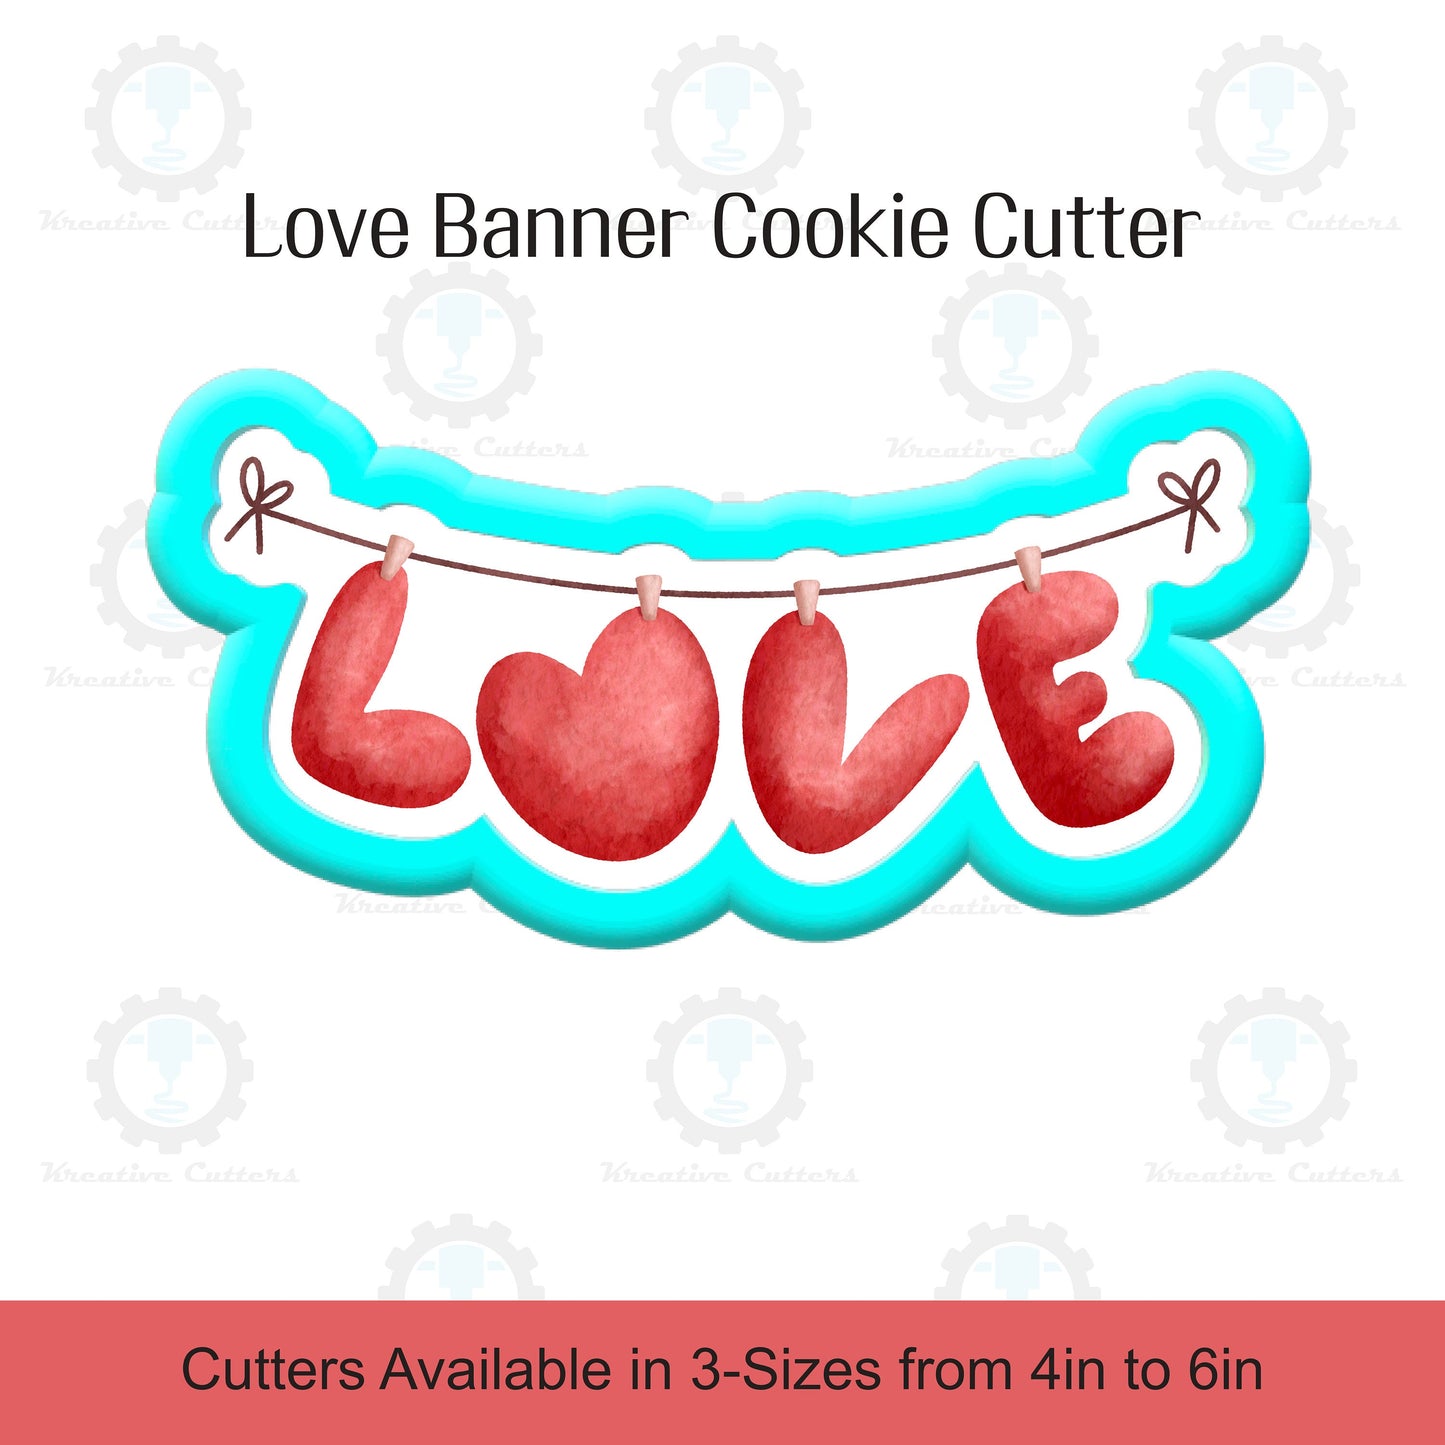 Love Banner Cookie Cutter